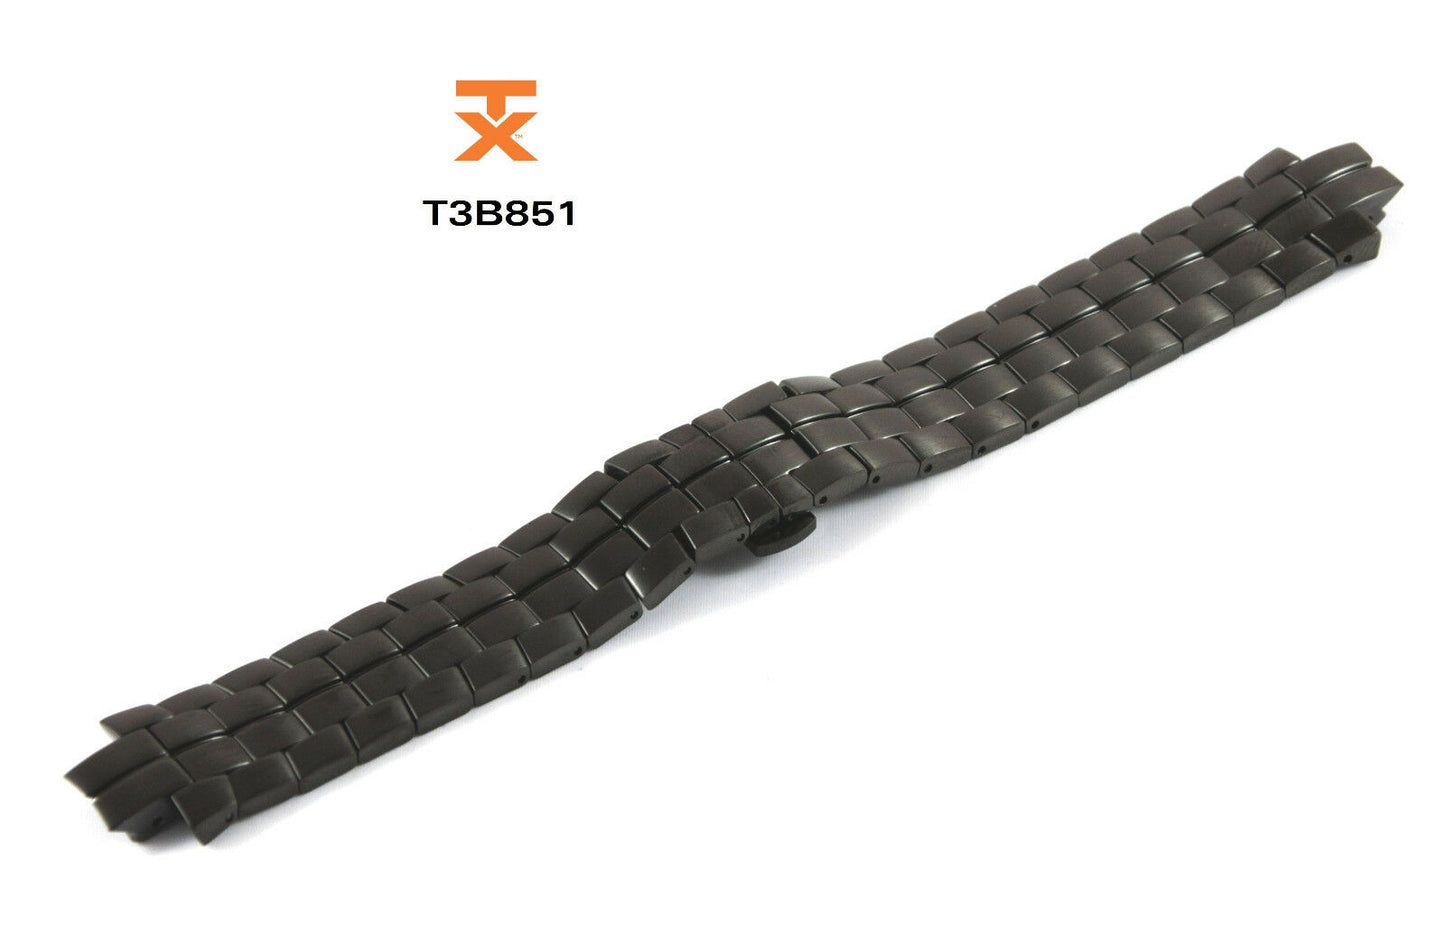 Timex TX Ersatzarmband T3B851 - TX 770 - Ersatzband - passt T3B871 T3B881 T3C061